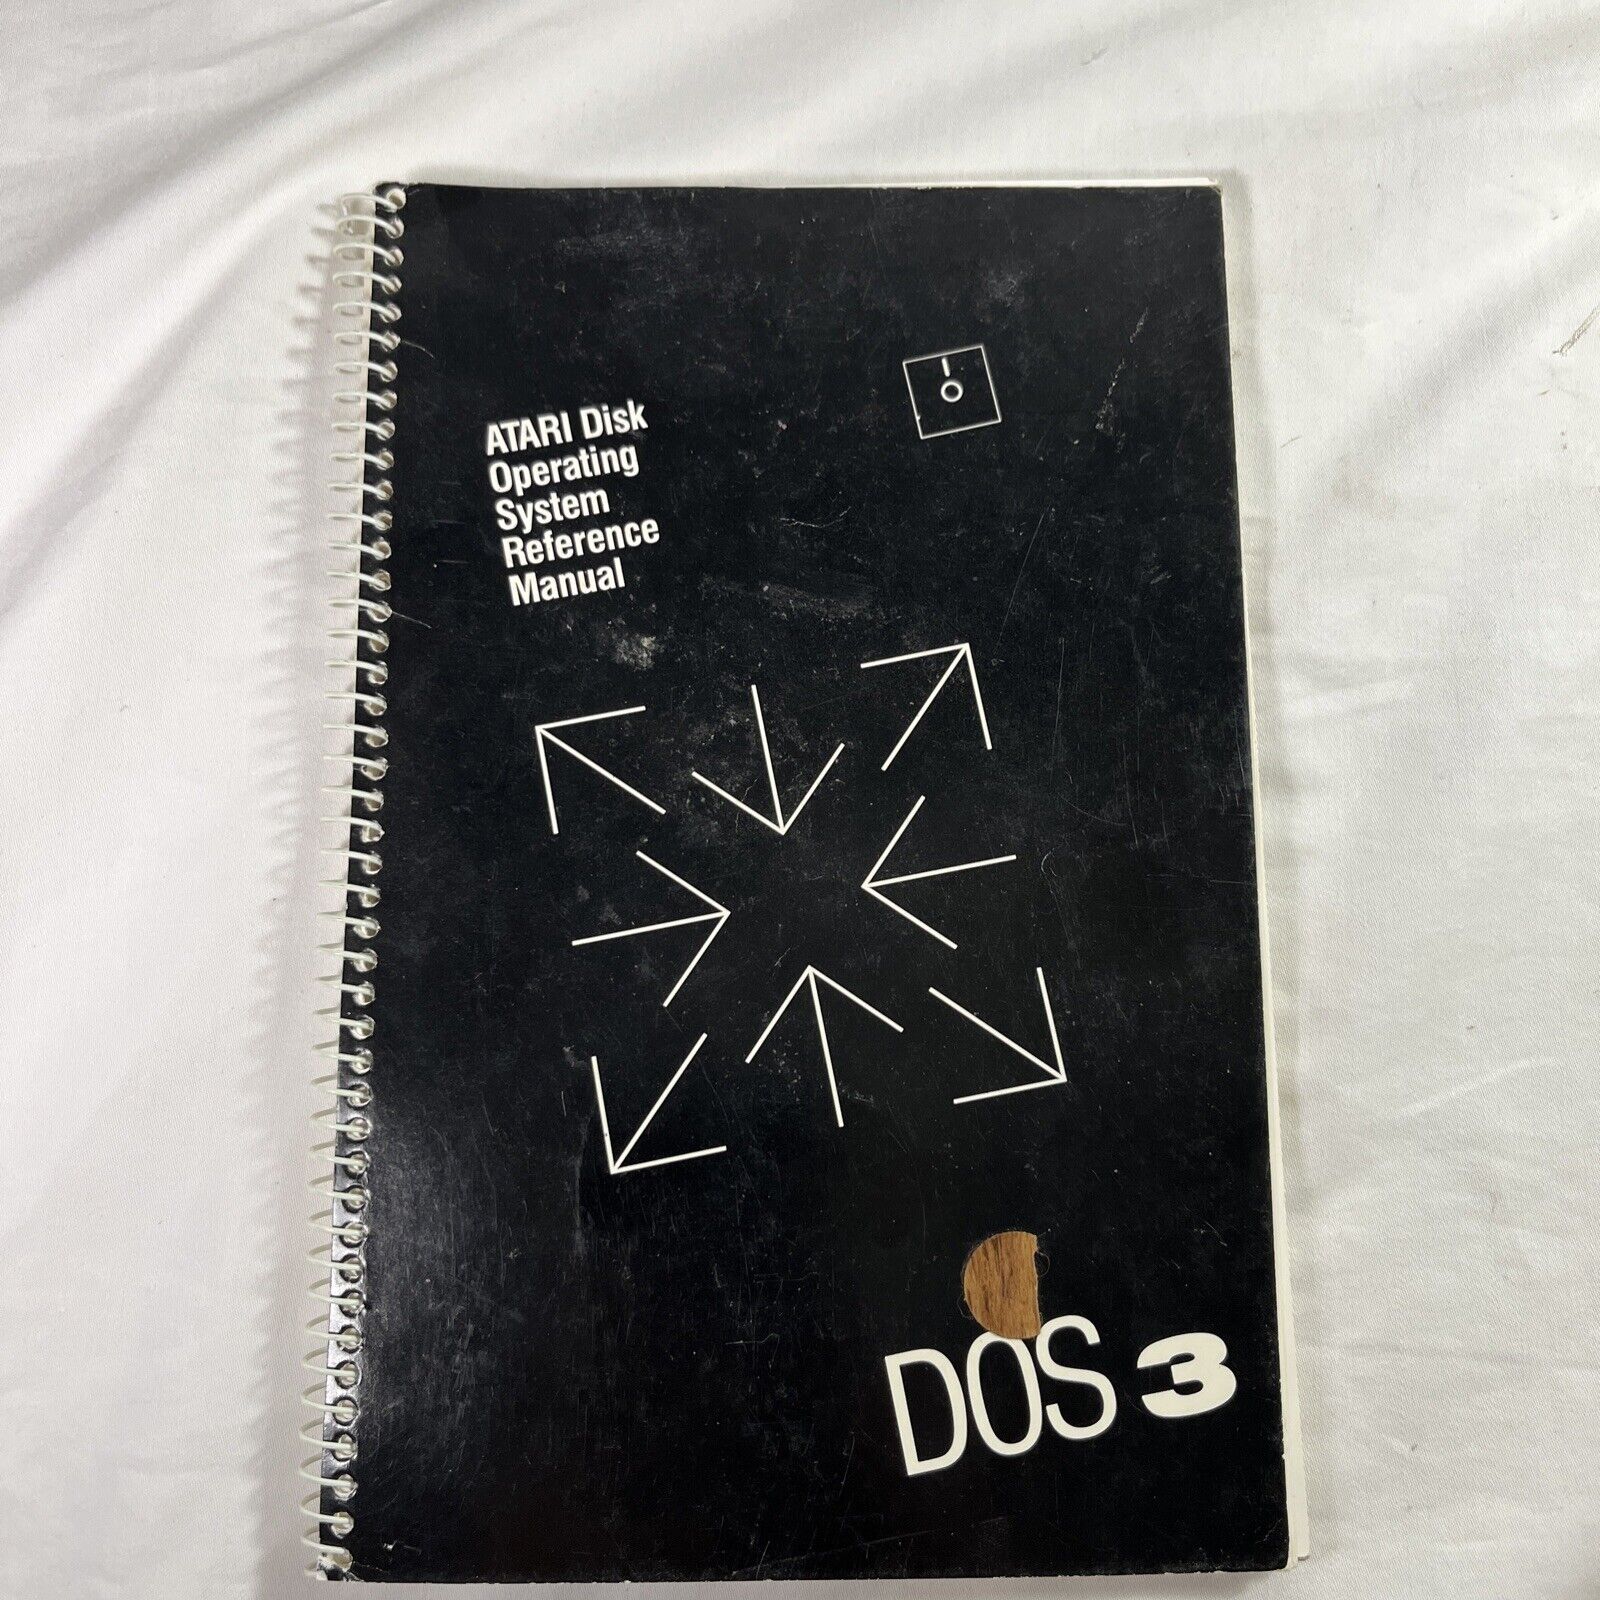 Vtg 1983 ATARI Disk Operating System III Reference Manual DOS 3 Spiral Bound